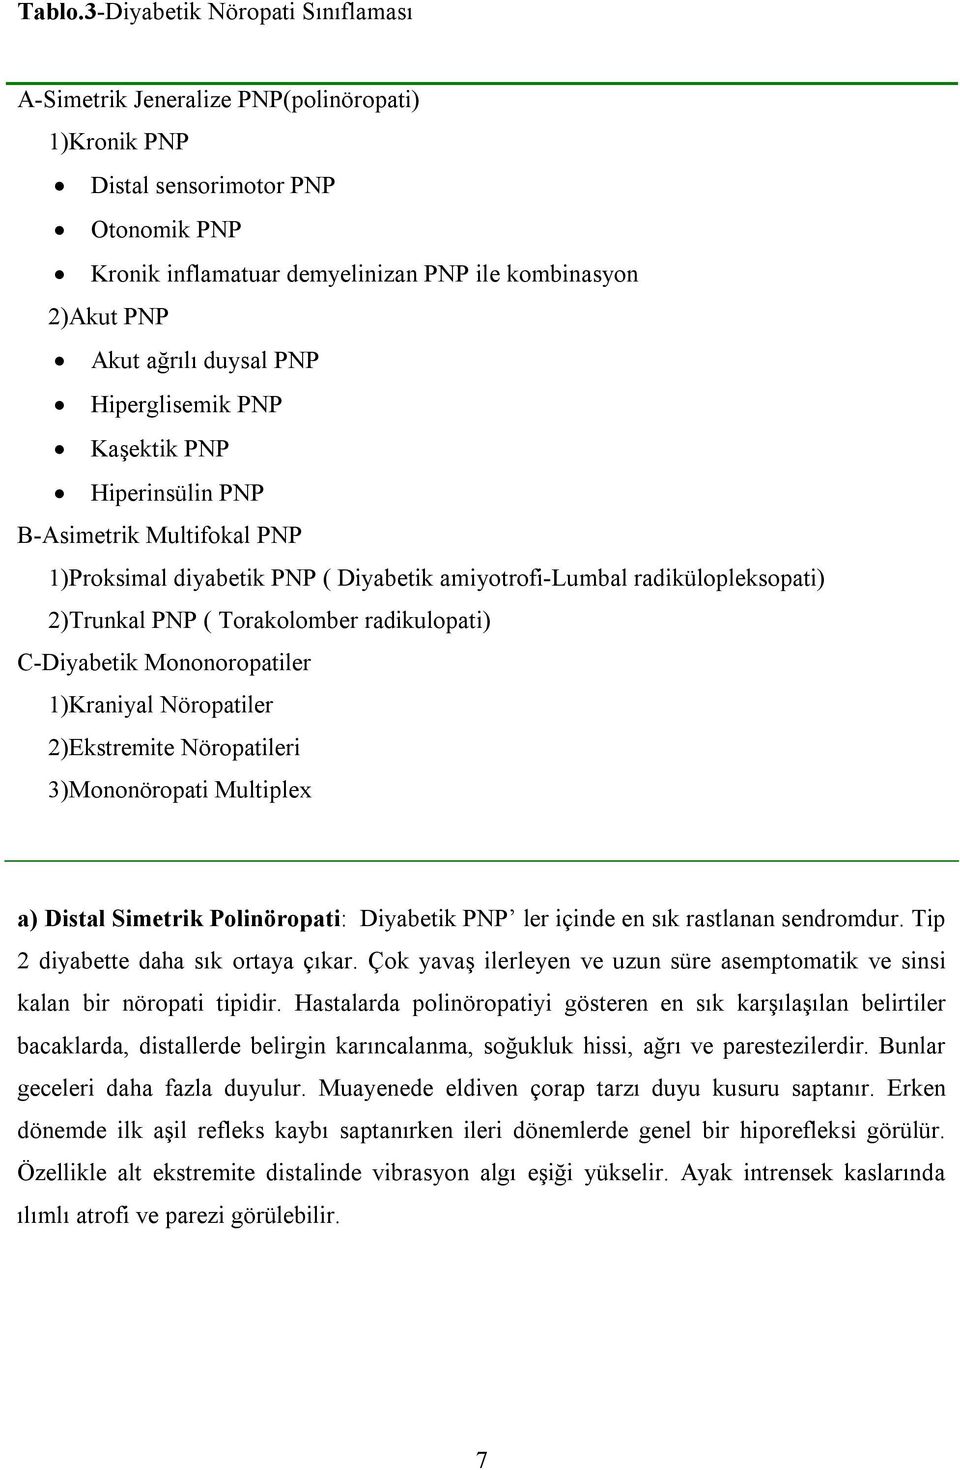 duysal PNP Hiperglisemik PNP Kaşektik PNP Hiperinsülin PNP B-Asimetrik Multifokal PNP 1)Proksimal diyabetik PNP ( Diyabetik amiyotrofi-lumbal radikülopleksopati) 2)Trunkal PNP ( Torakolomber